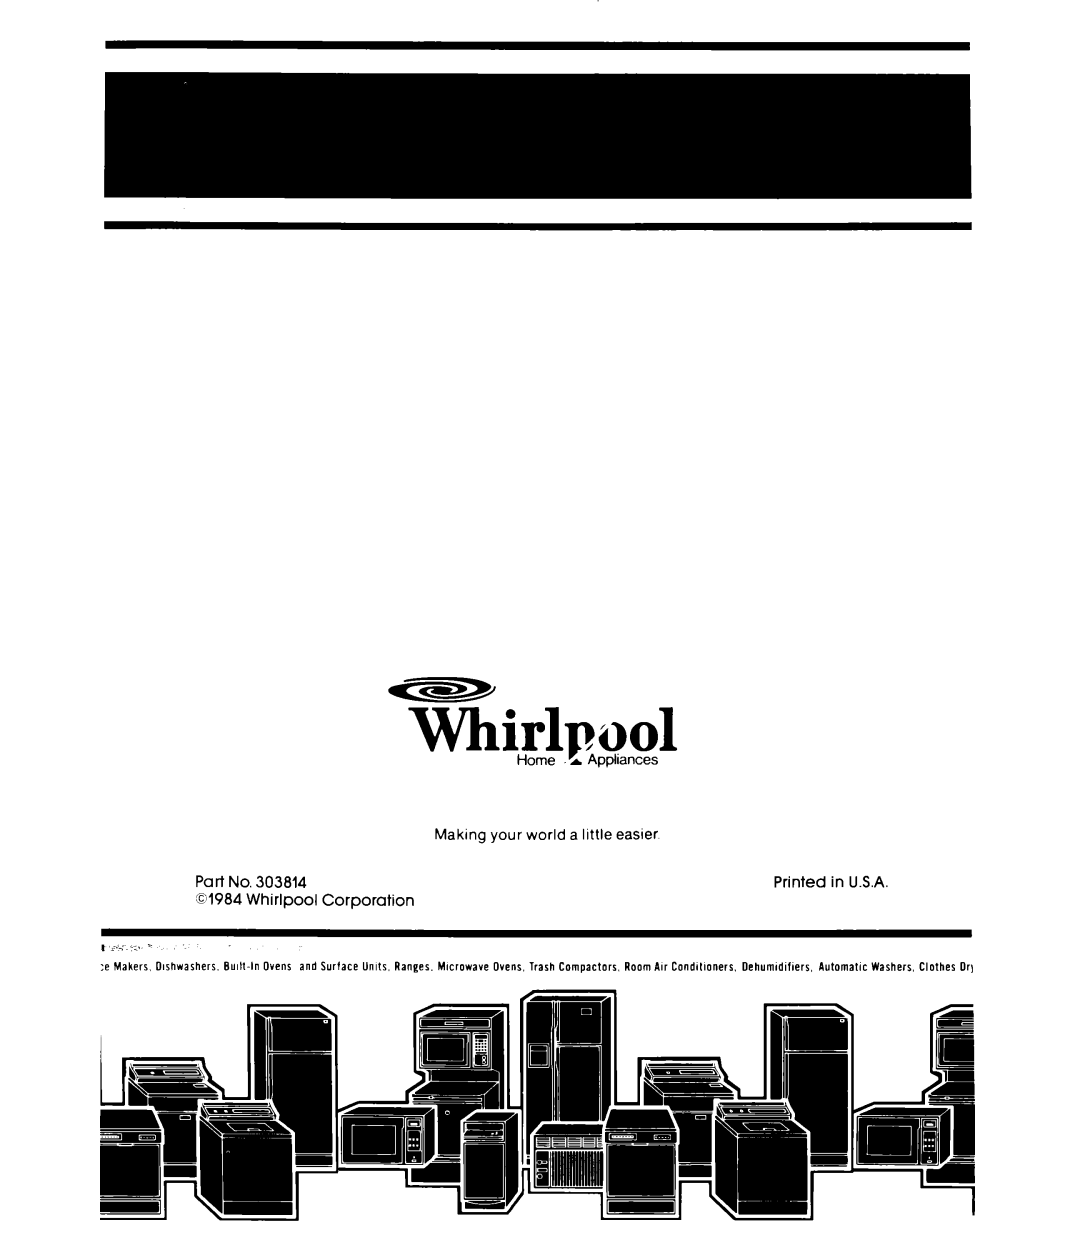 Whirlpool DU7503XL Whirlpool, L /Appliances, Making your world a little easier, in U.S.A, 01984, Corporation, i’y..- ’ 